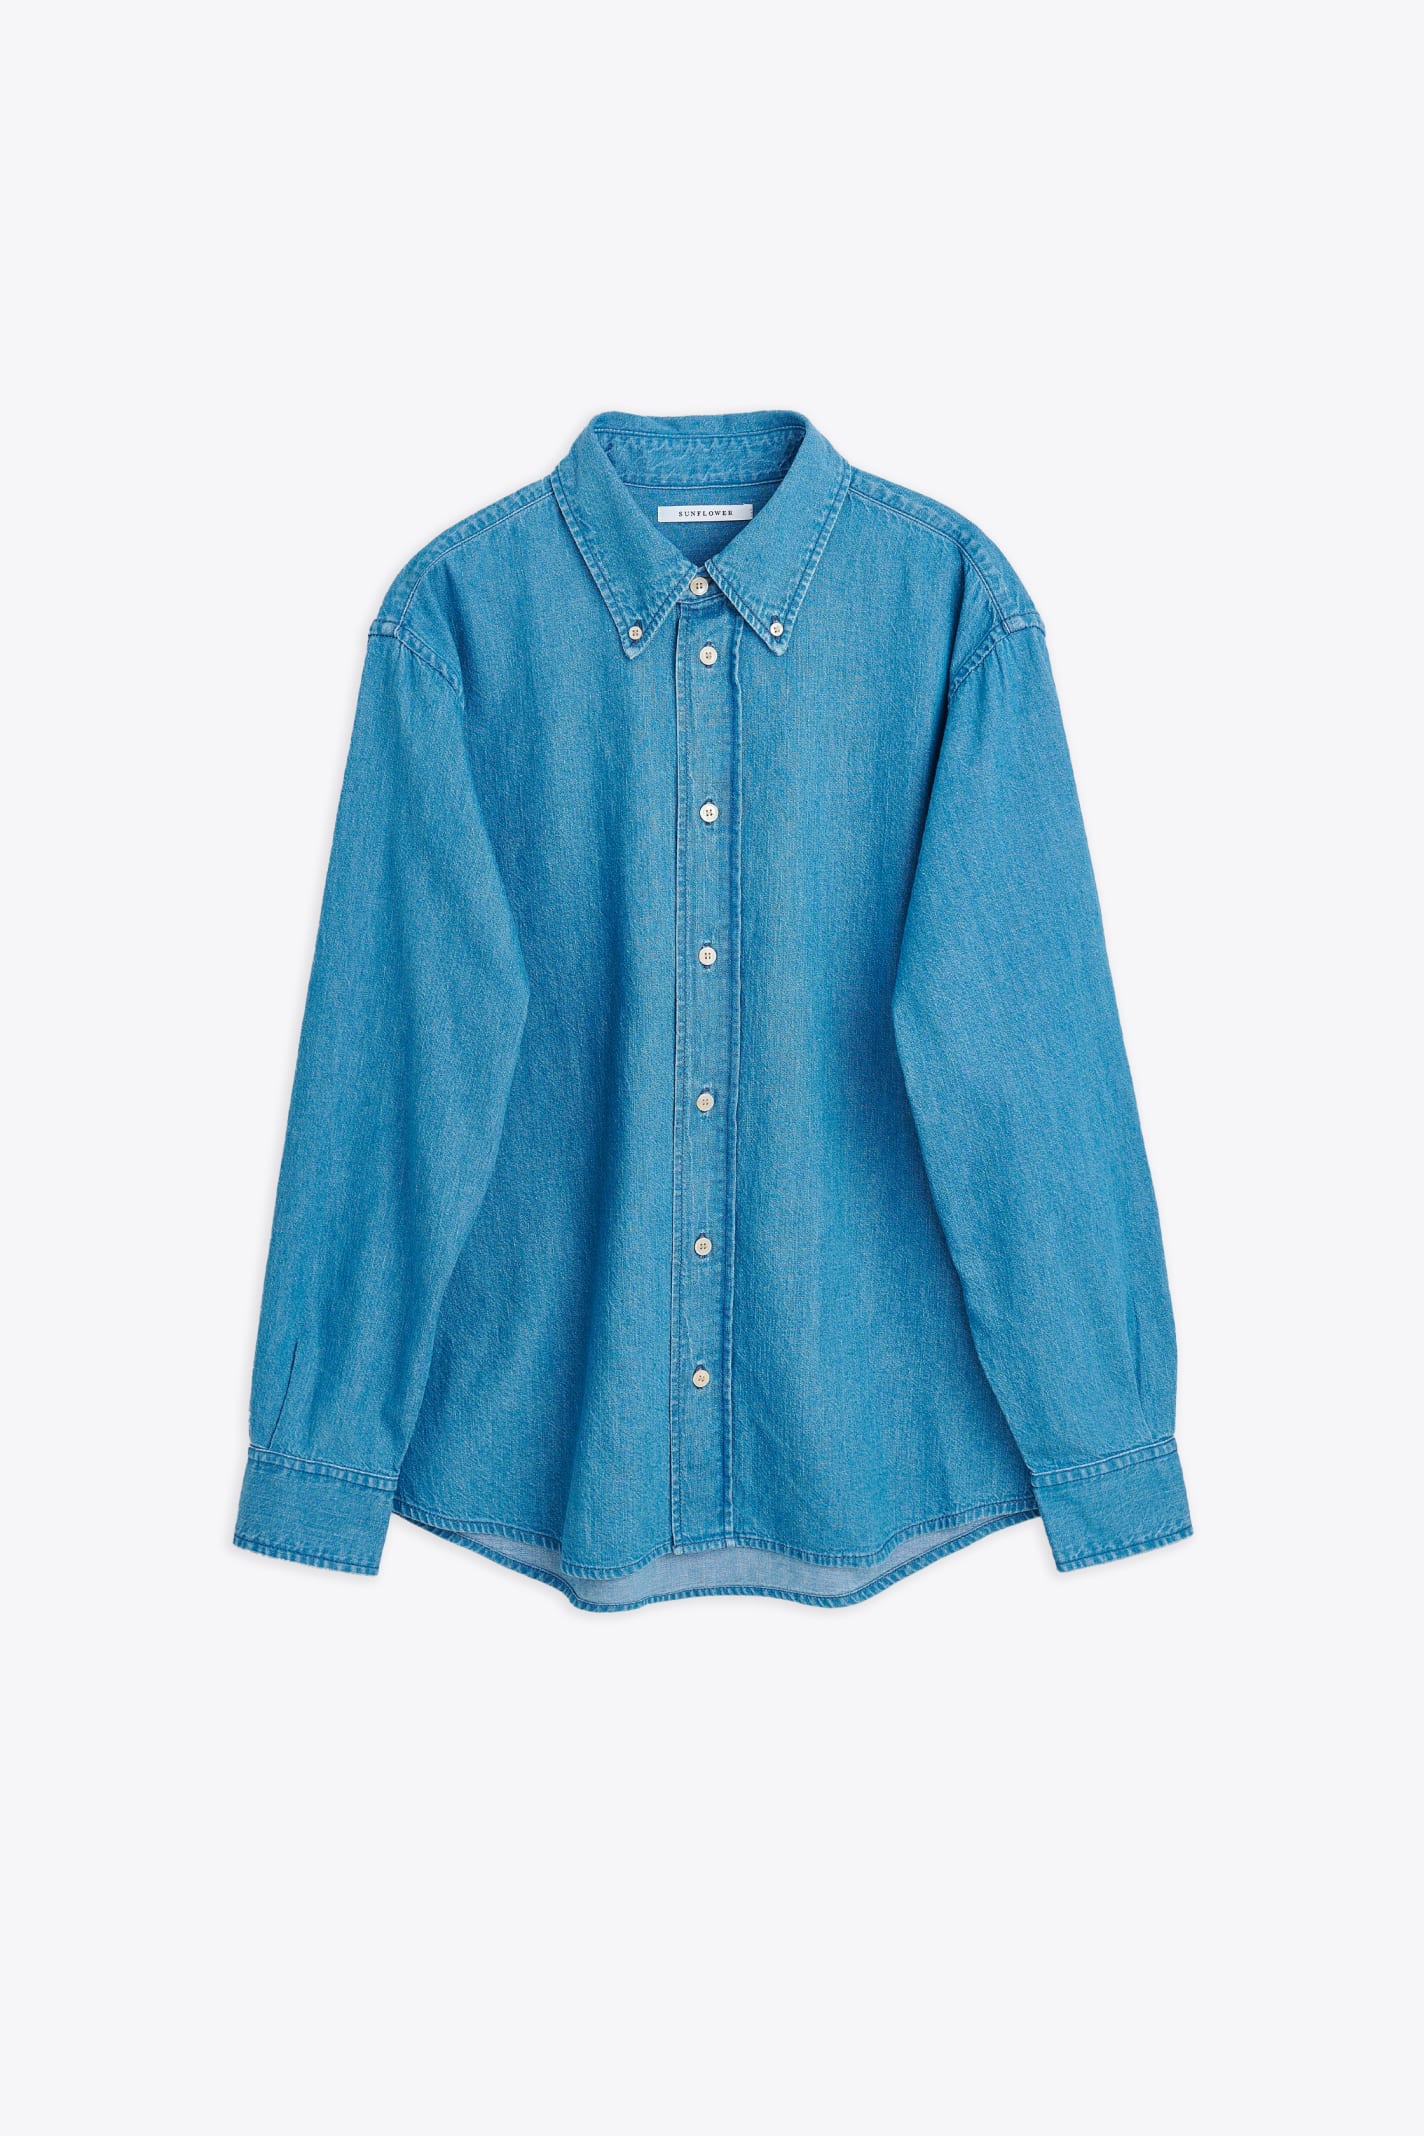 #1189 Mid blue chambray denim shirt with long sleeves - Denim Button Down Shirt